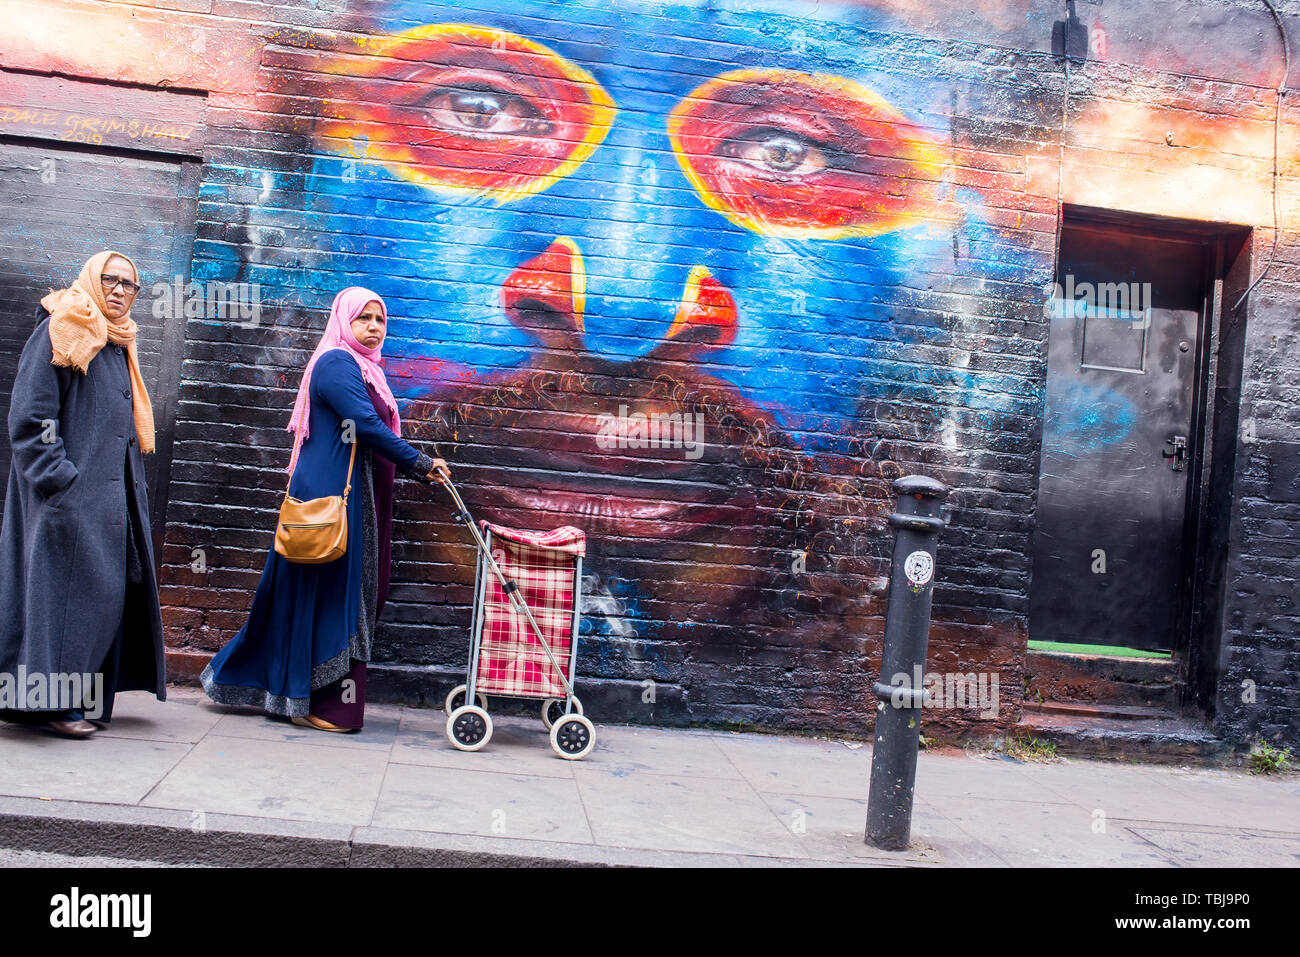 Brick Lane, Shoreditch, London, England, UK - April 2019: Two Indian women wearing hijabs walking in Brick lane next to a wall covered in graffiti mur Stock Photo